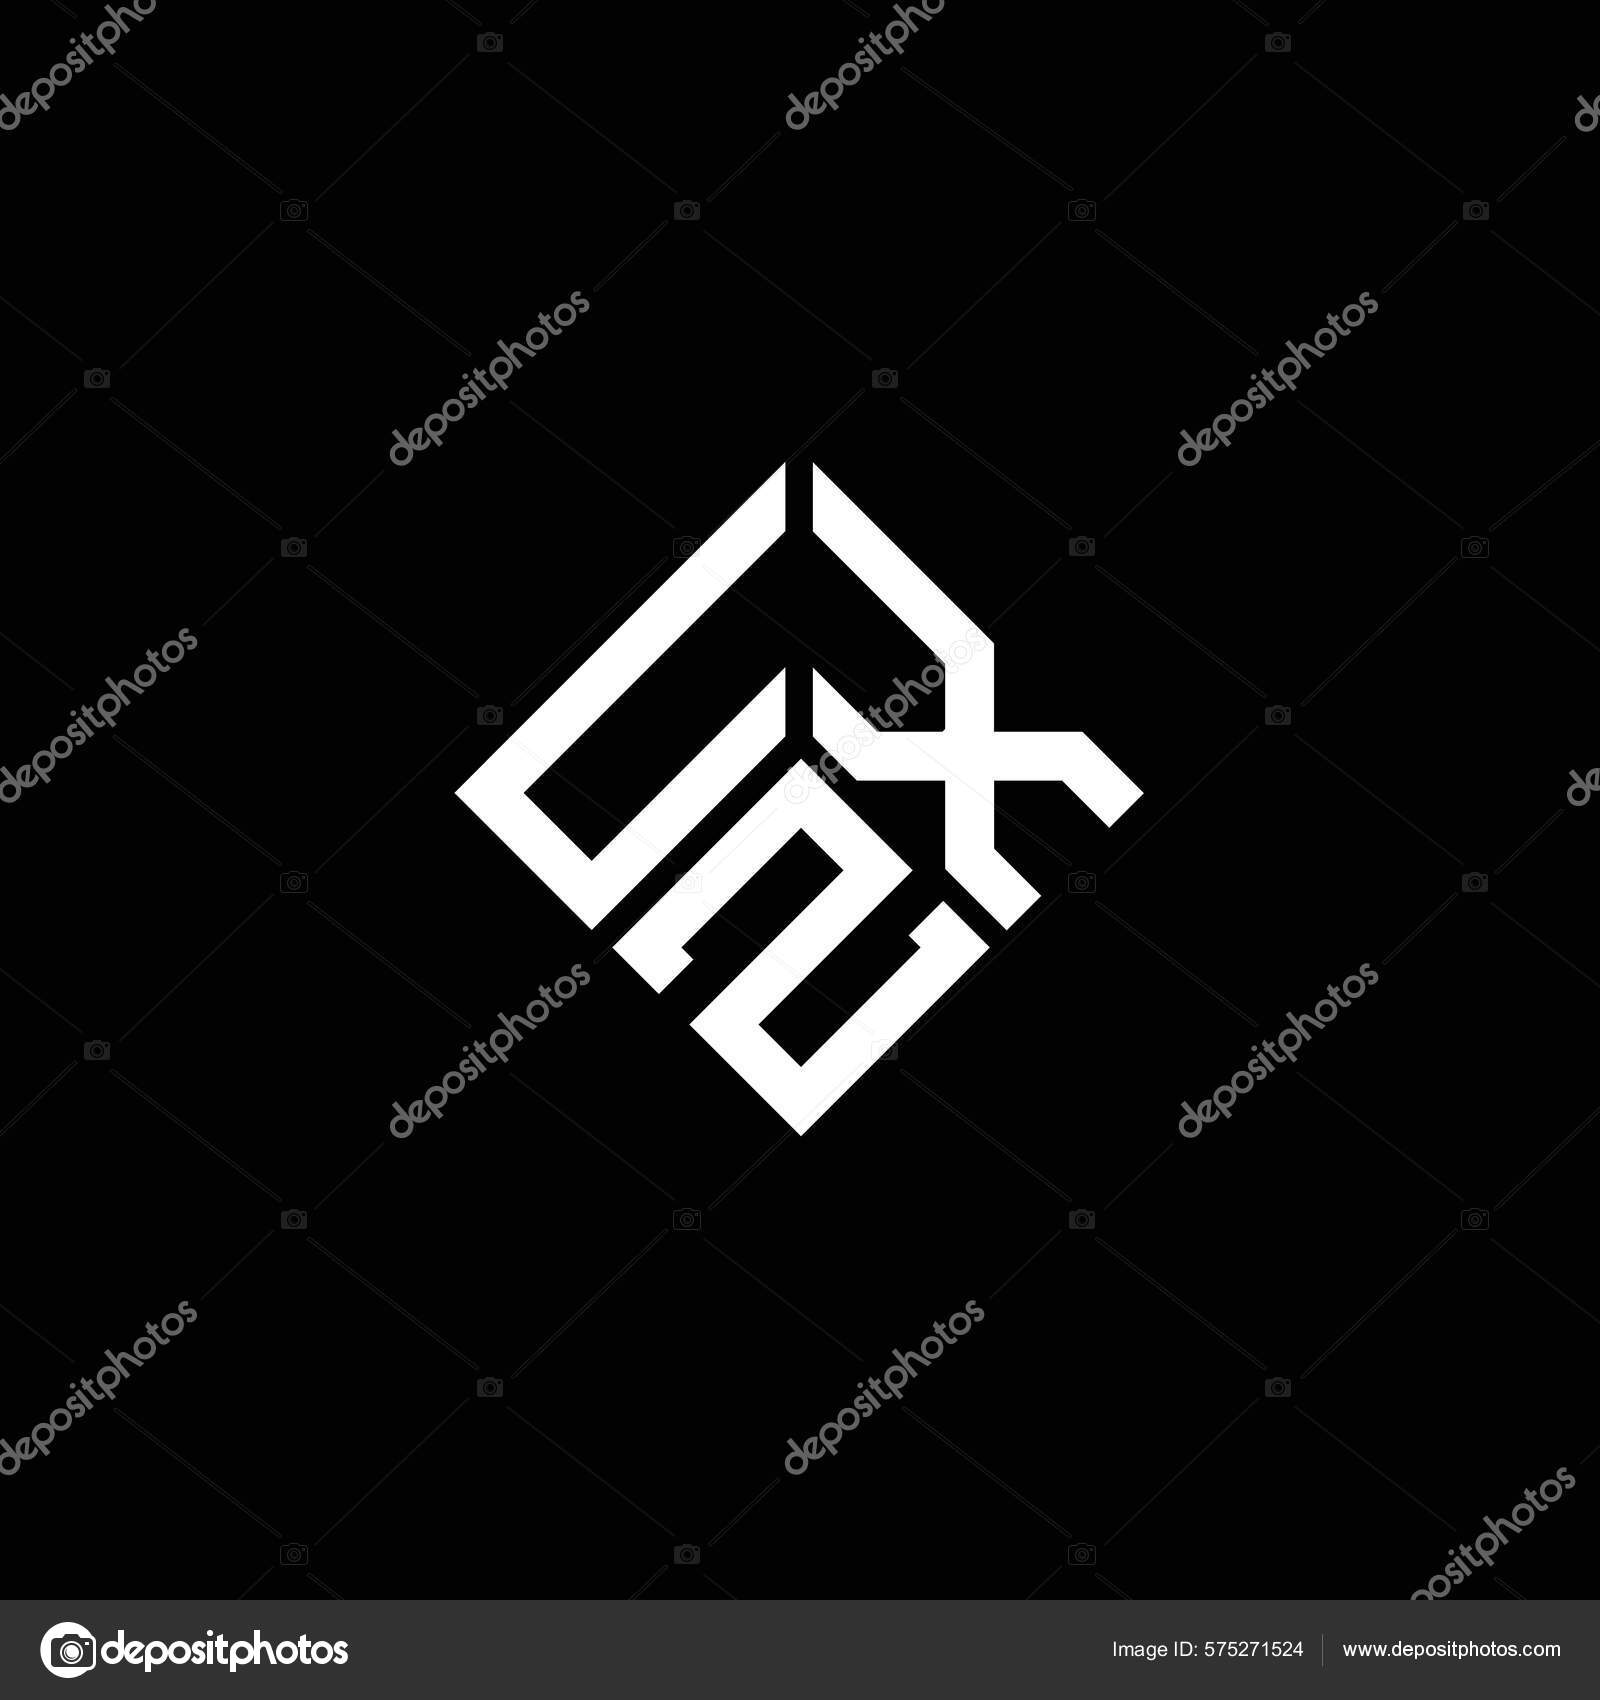 Uxz Letter Logo Design Black Background Uxz Creative Initials Letter ...